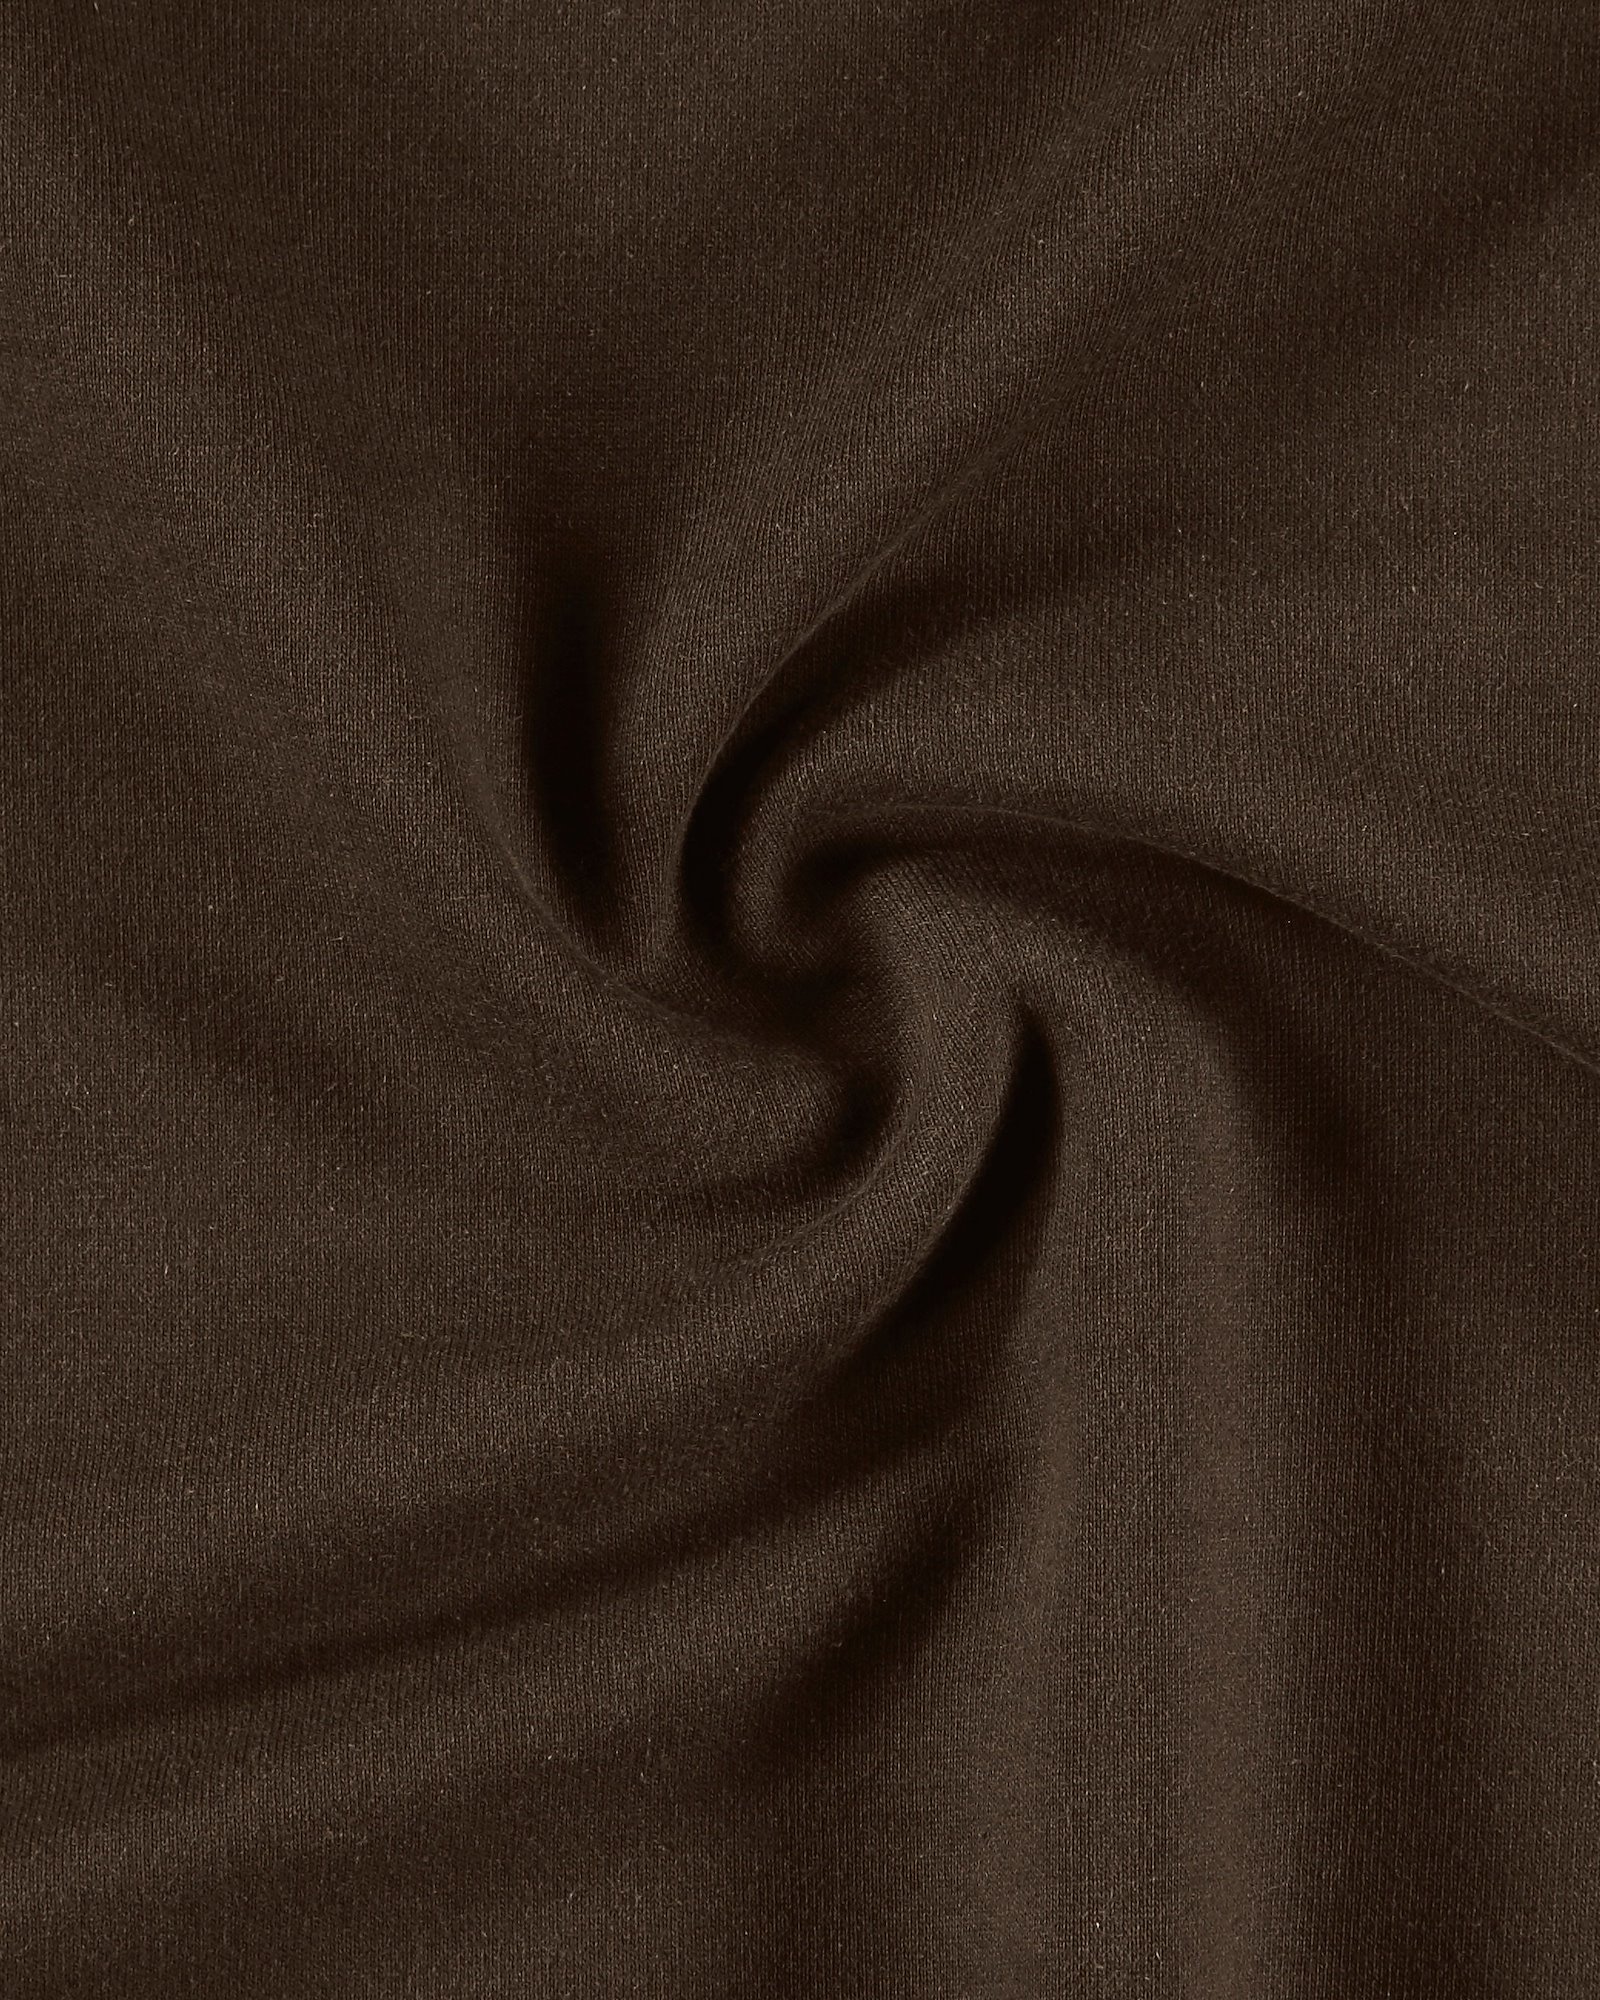 Organic kraftig sweatshirt mörkbrun bors 211810_pack